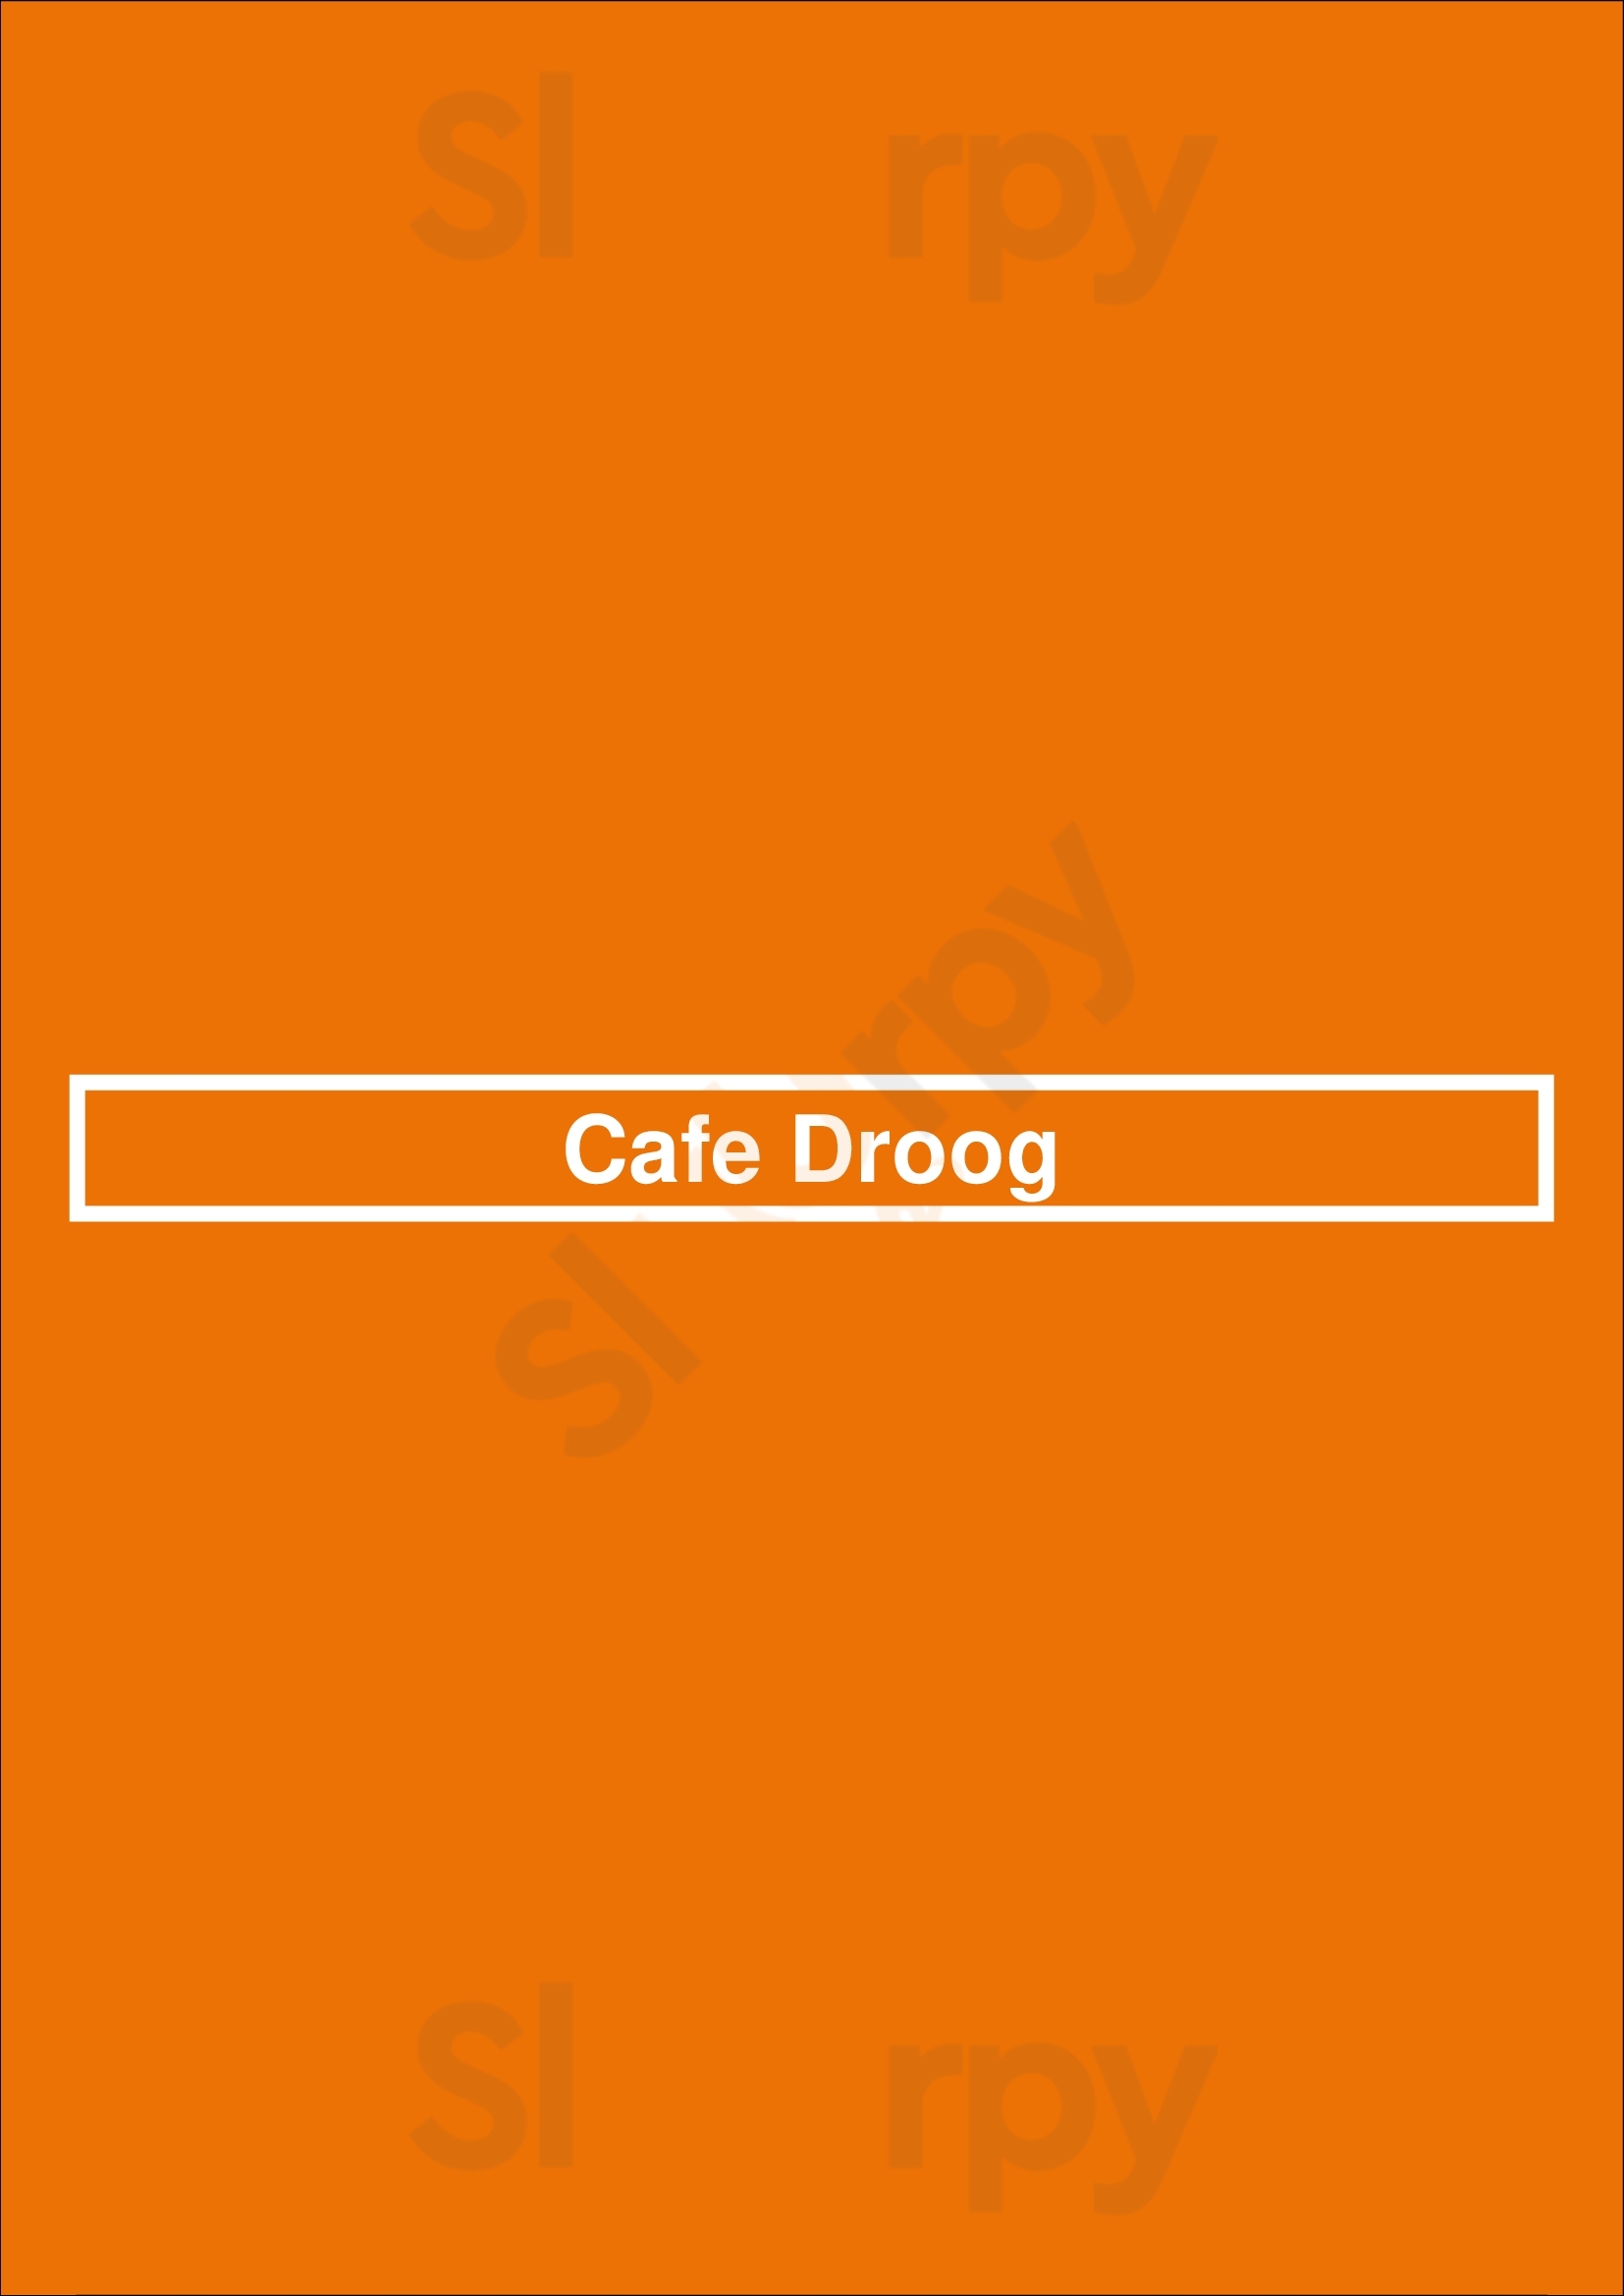 Cafe Droog Amsterdam Menu - 1